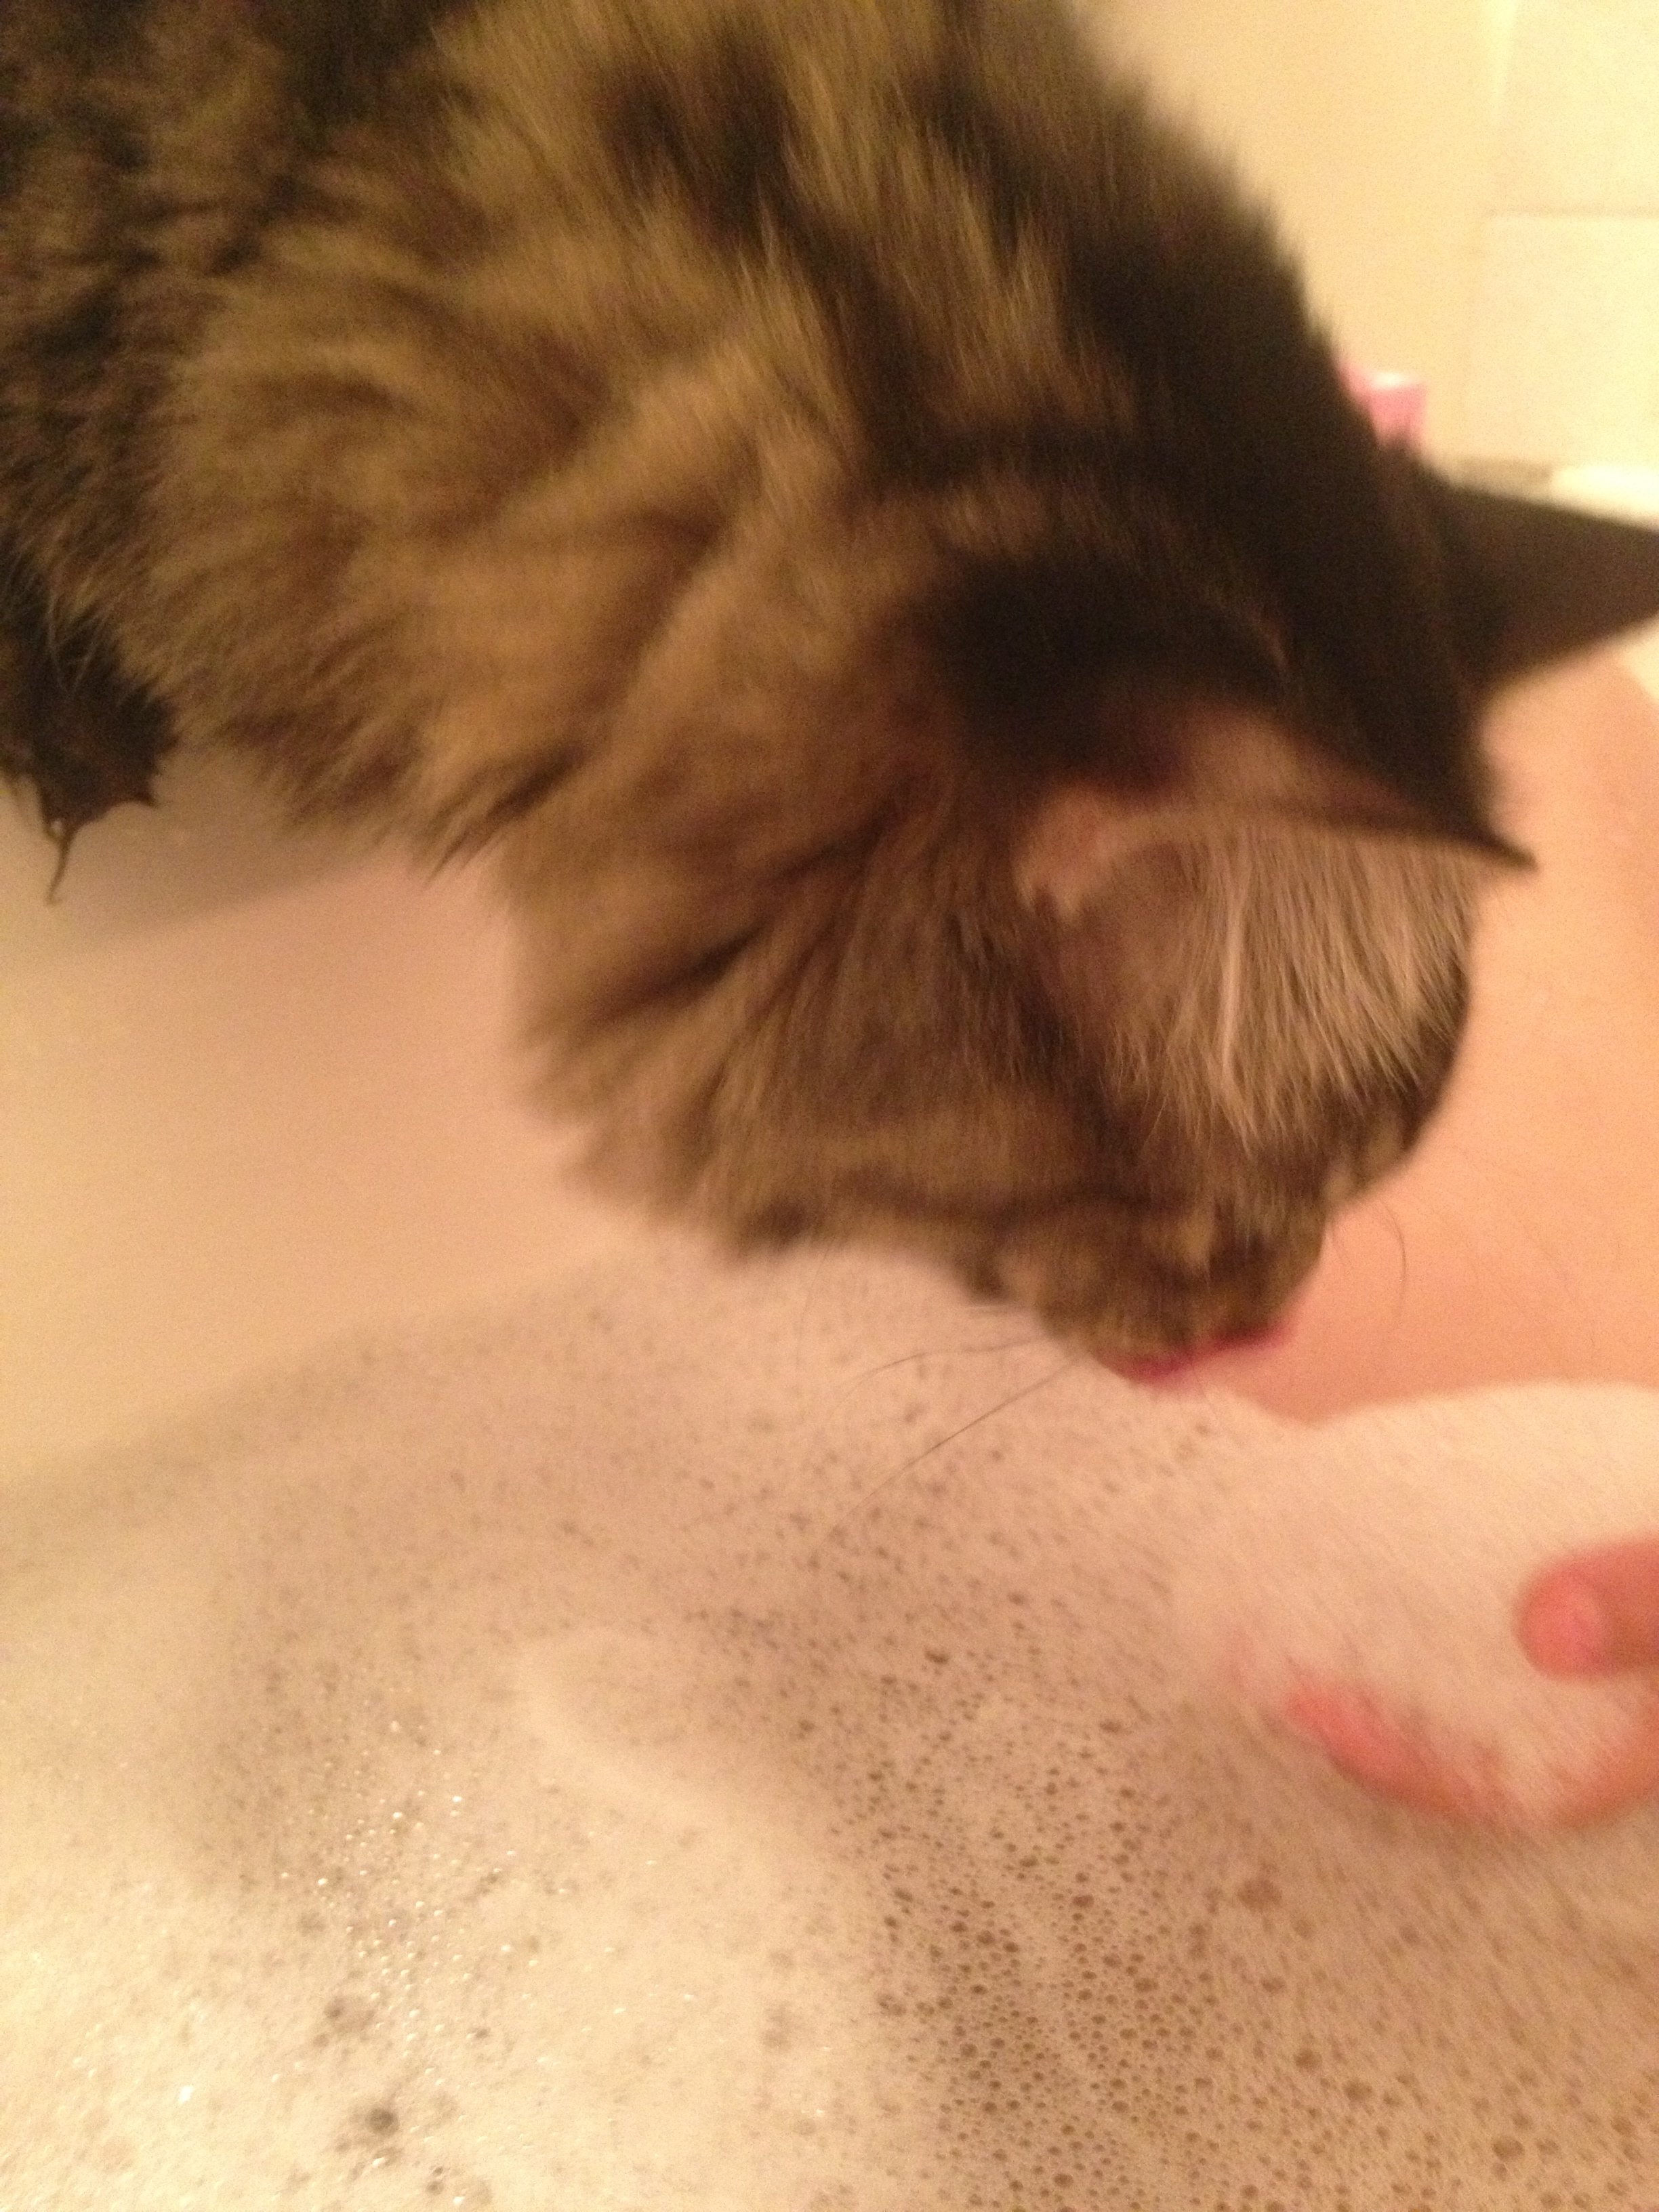 loves intruding on my bath time.